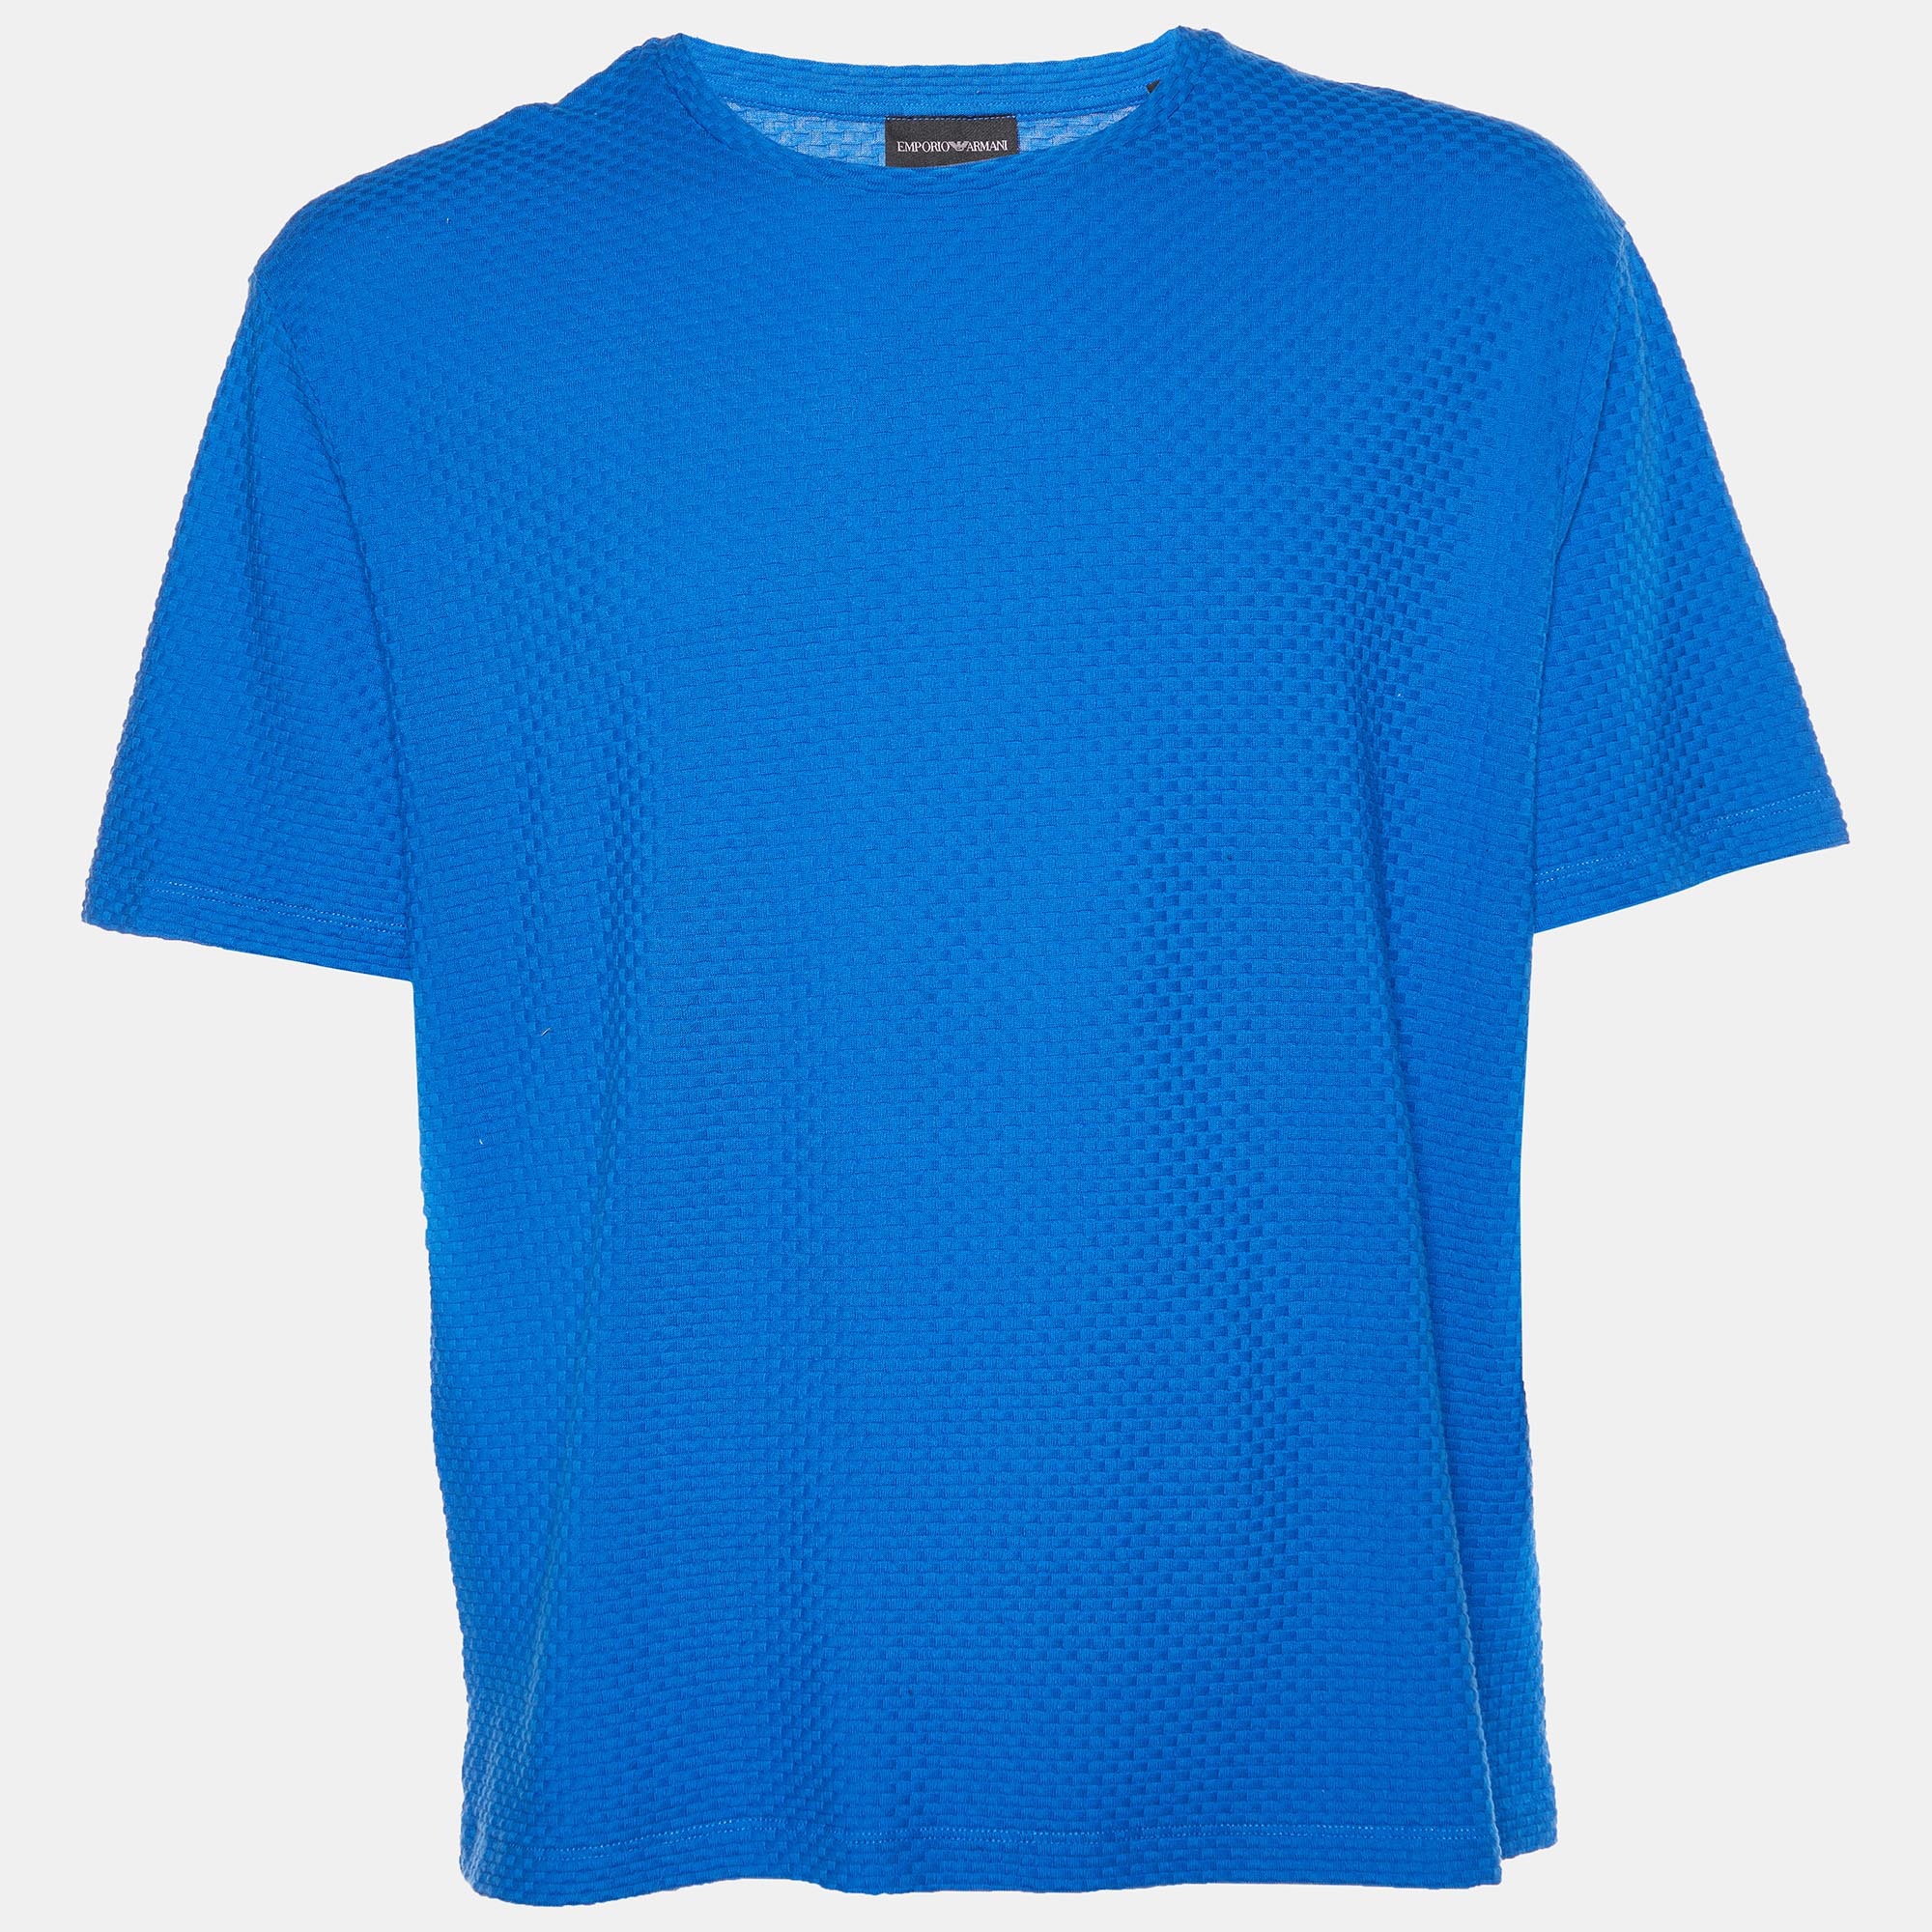 Emporio Armani Blue Basket Weave Pattern Cototn Knit T-Shirt XXL